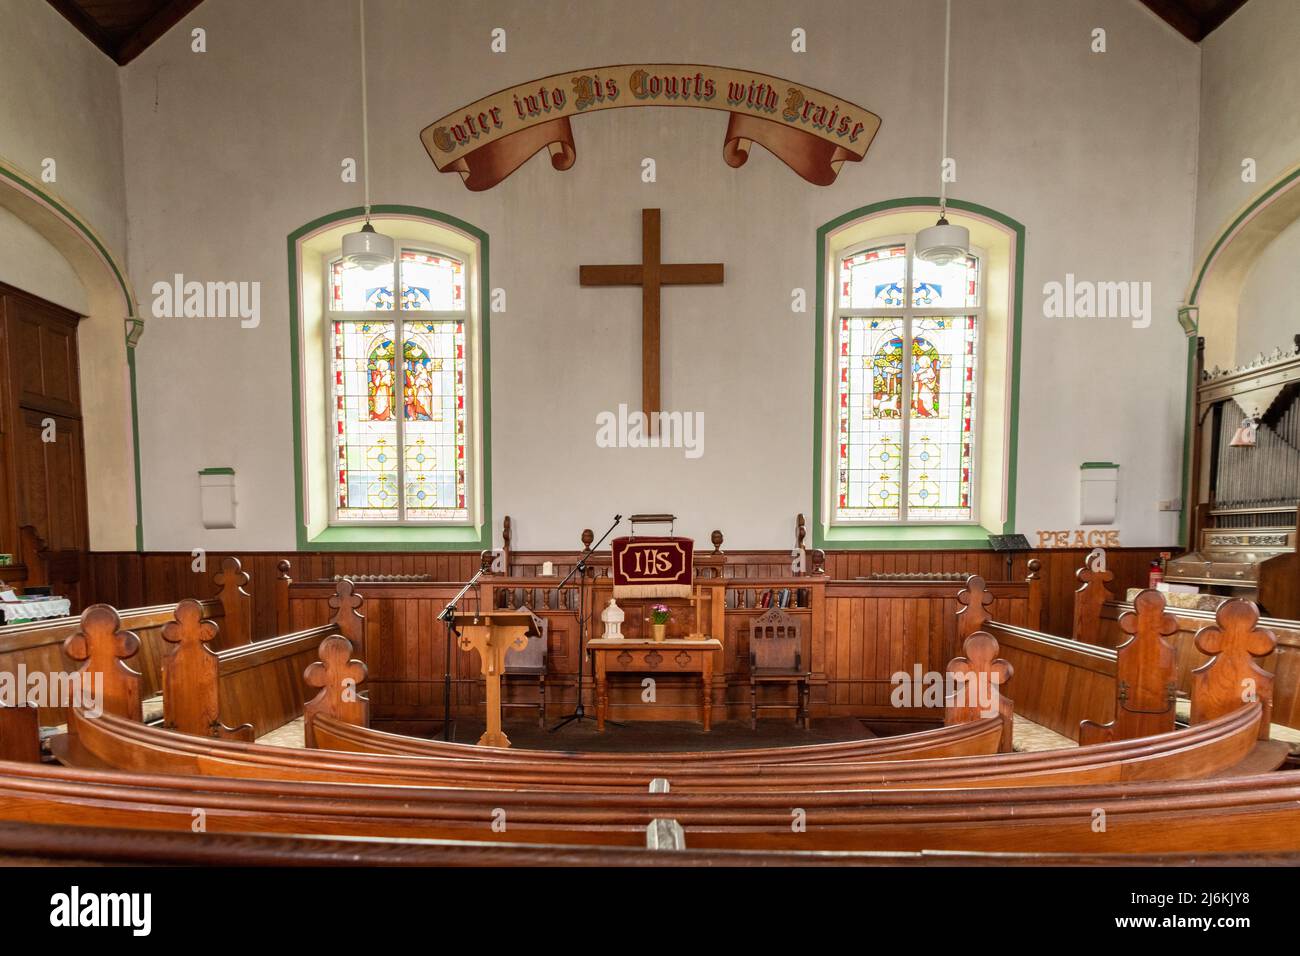 West Burton Methodist Church interior, North Yorkshire, England, UK Stock Photo